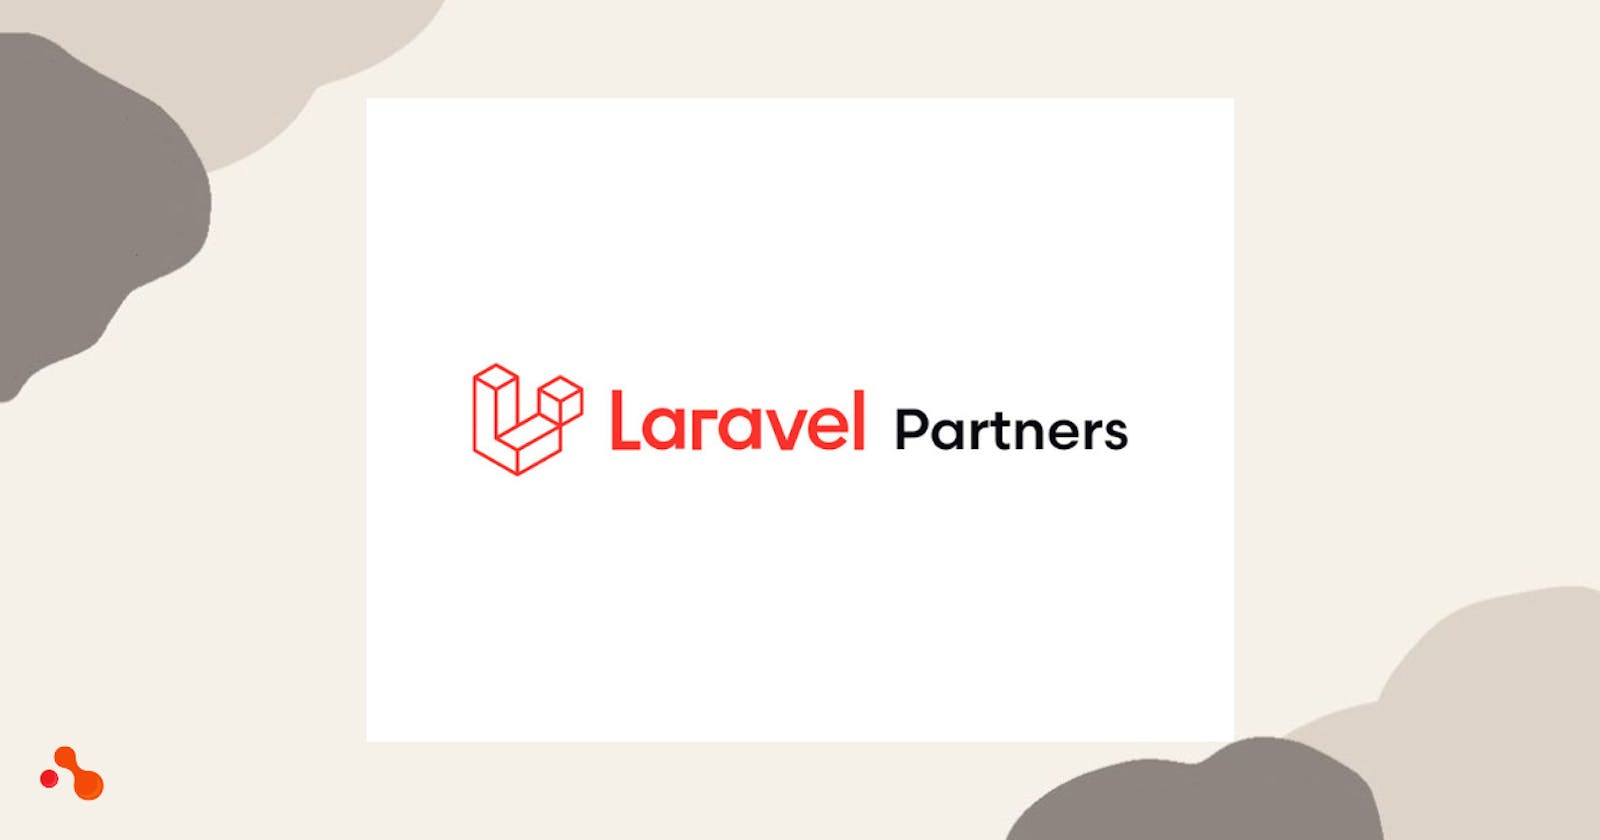 Laravel Scheduler: Scheduling Tasks and Jobs in Laravel Applications